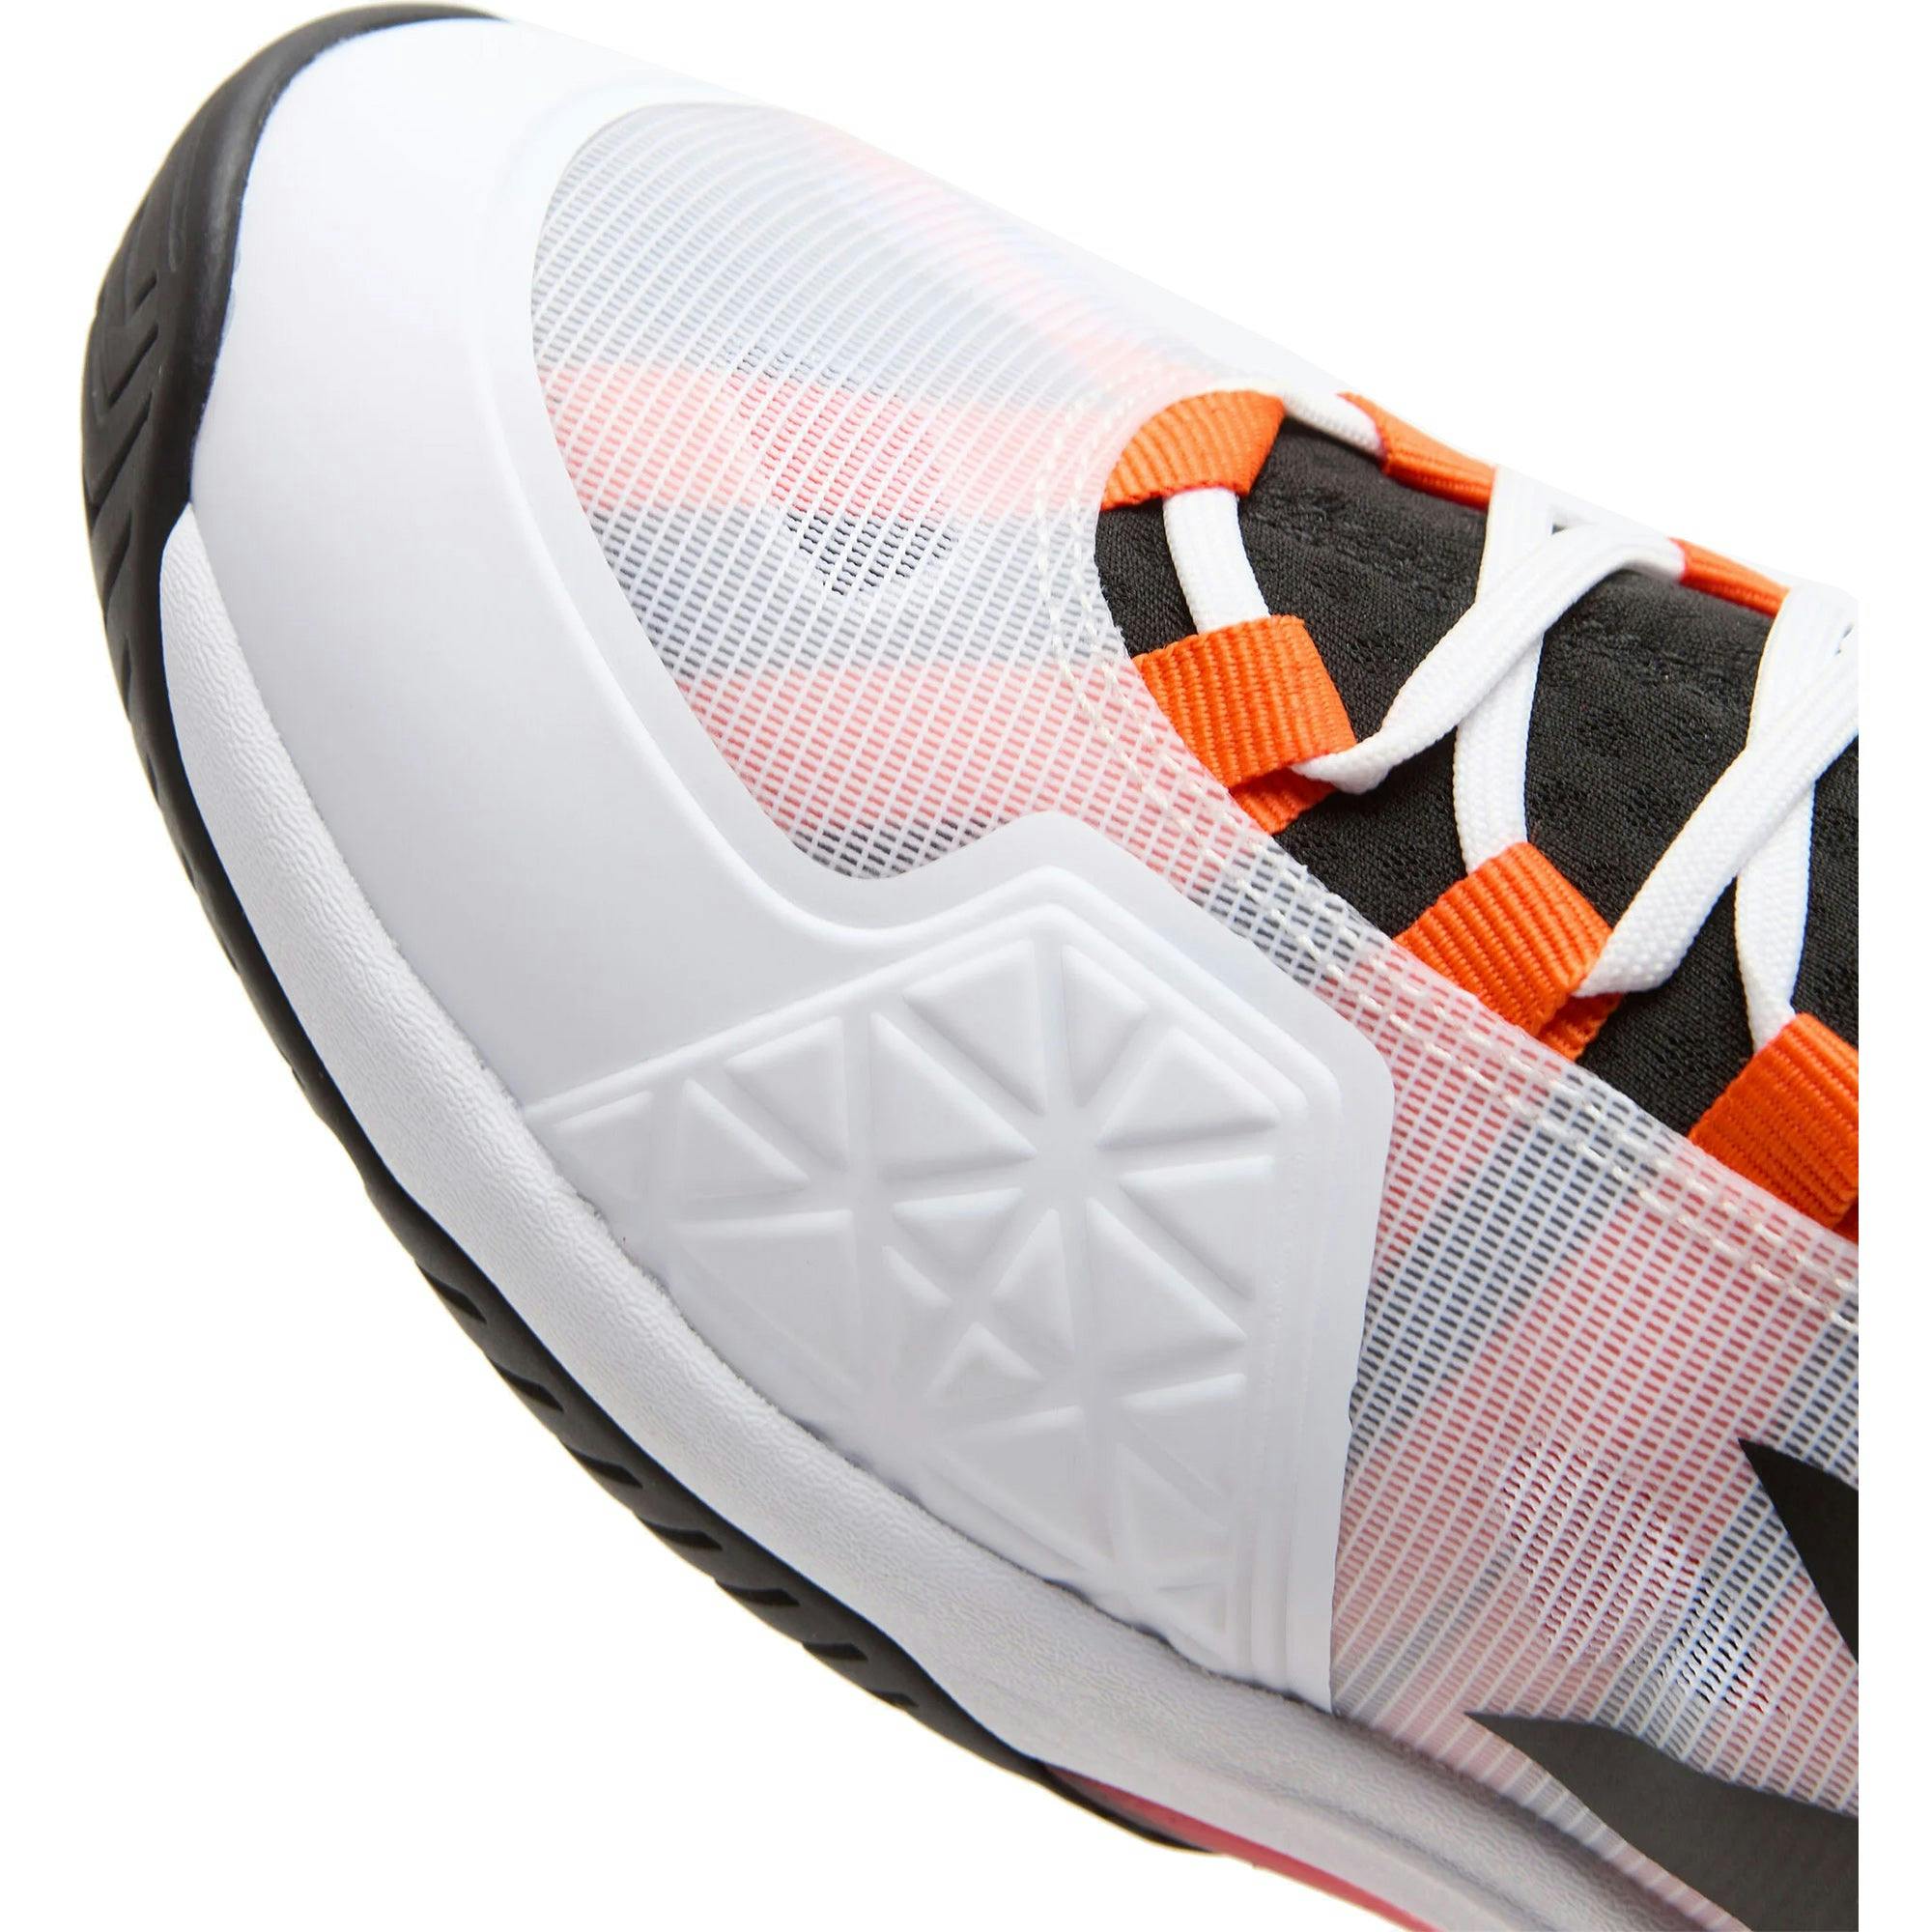 Diadora Speed Blushield Fly 3+ Mens Tennis Shoes - WHT/BK/RD C6714 / D Medium / 13.5